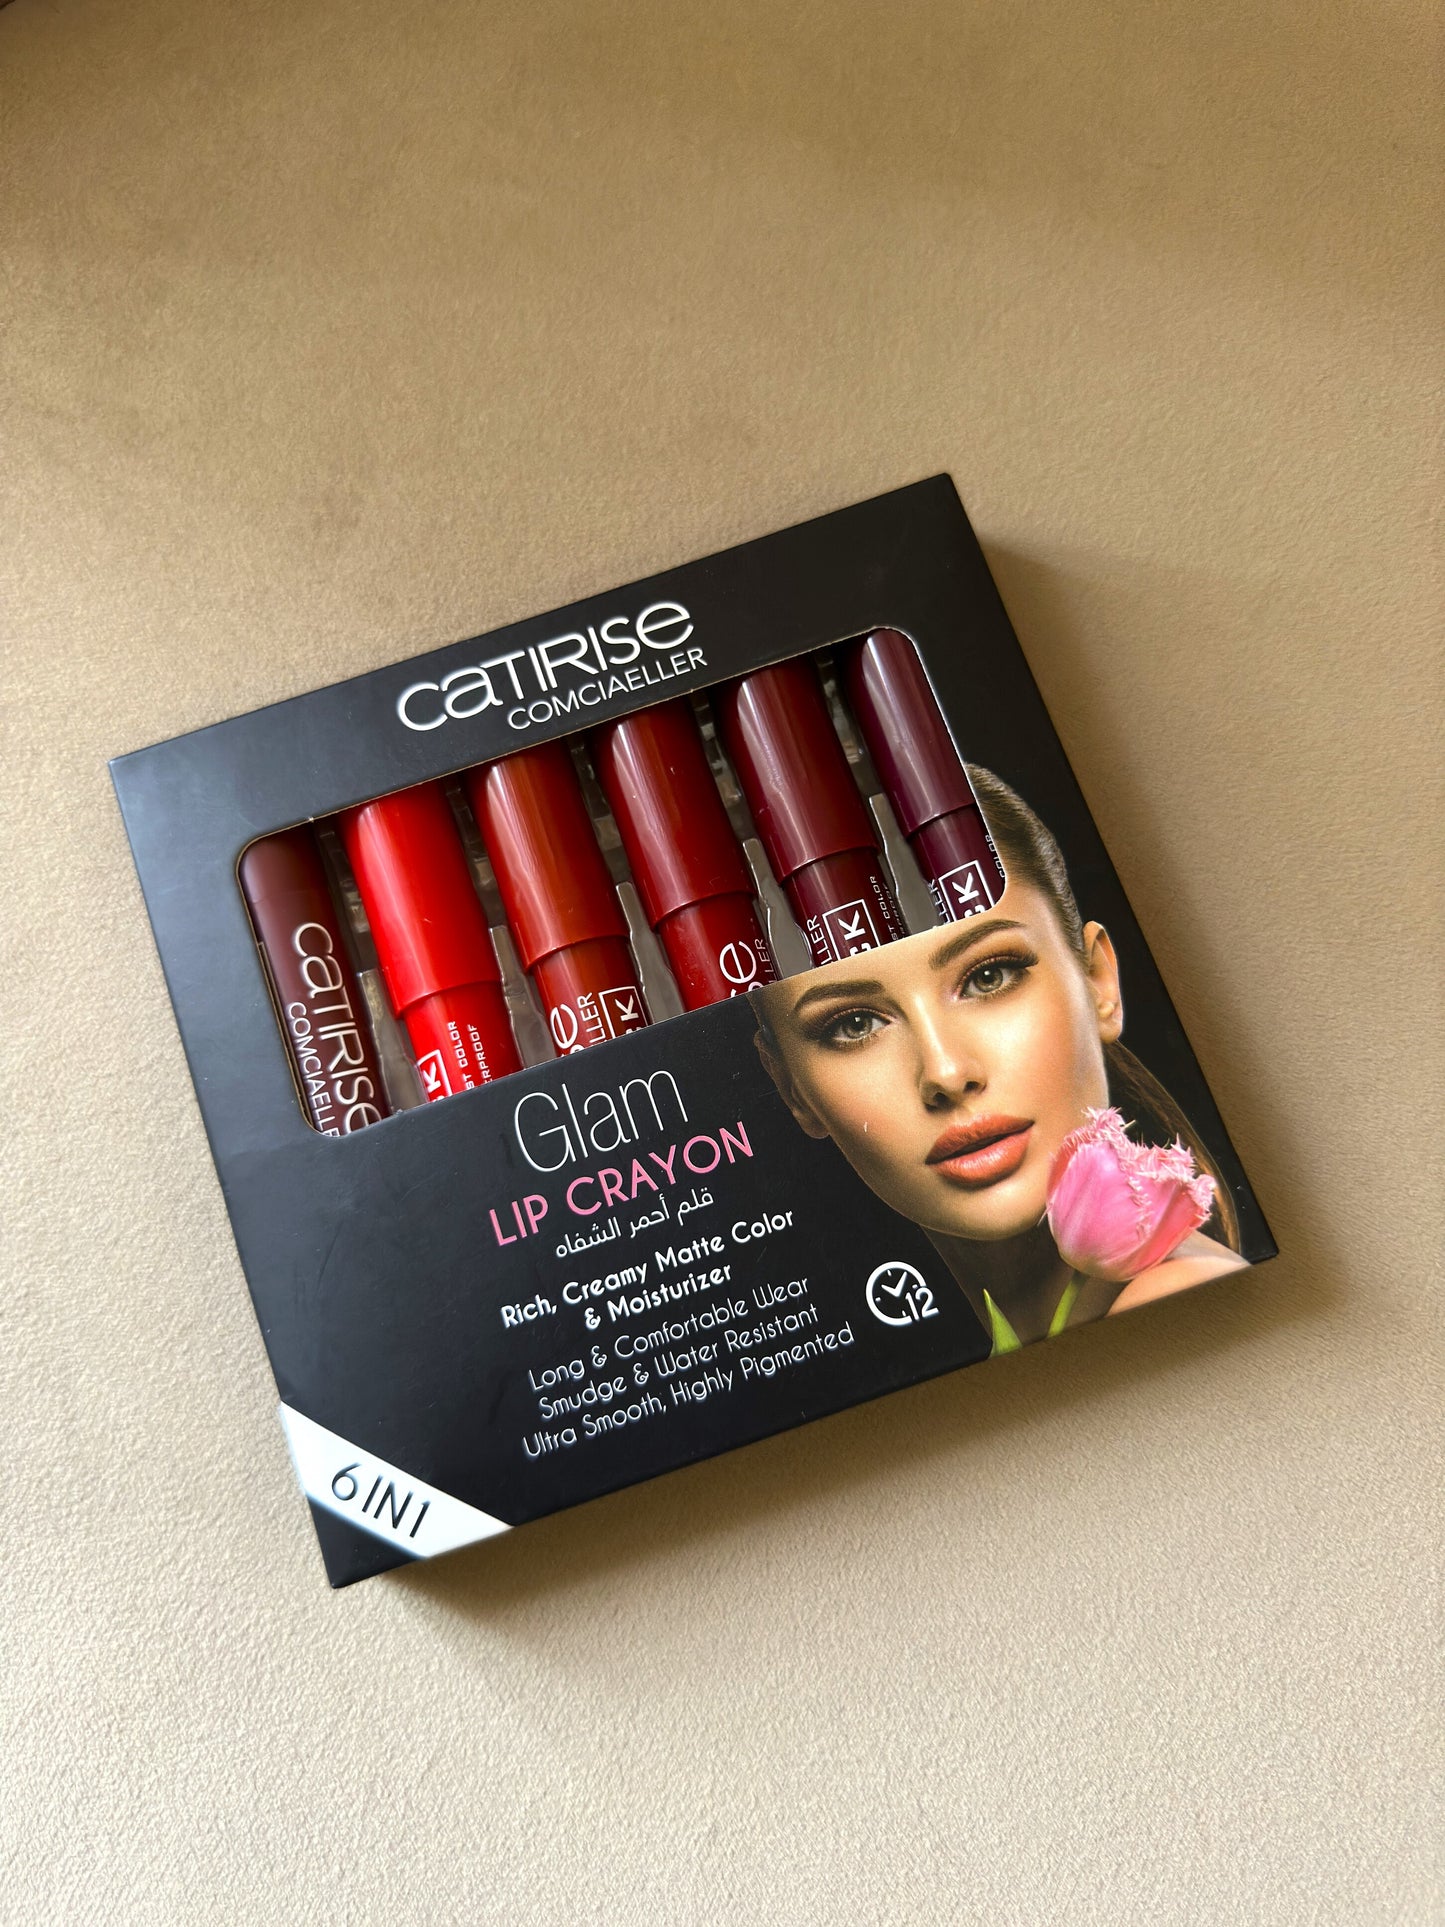 Catirise-comciaeller-Glam-lip crayon